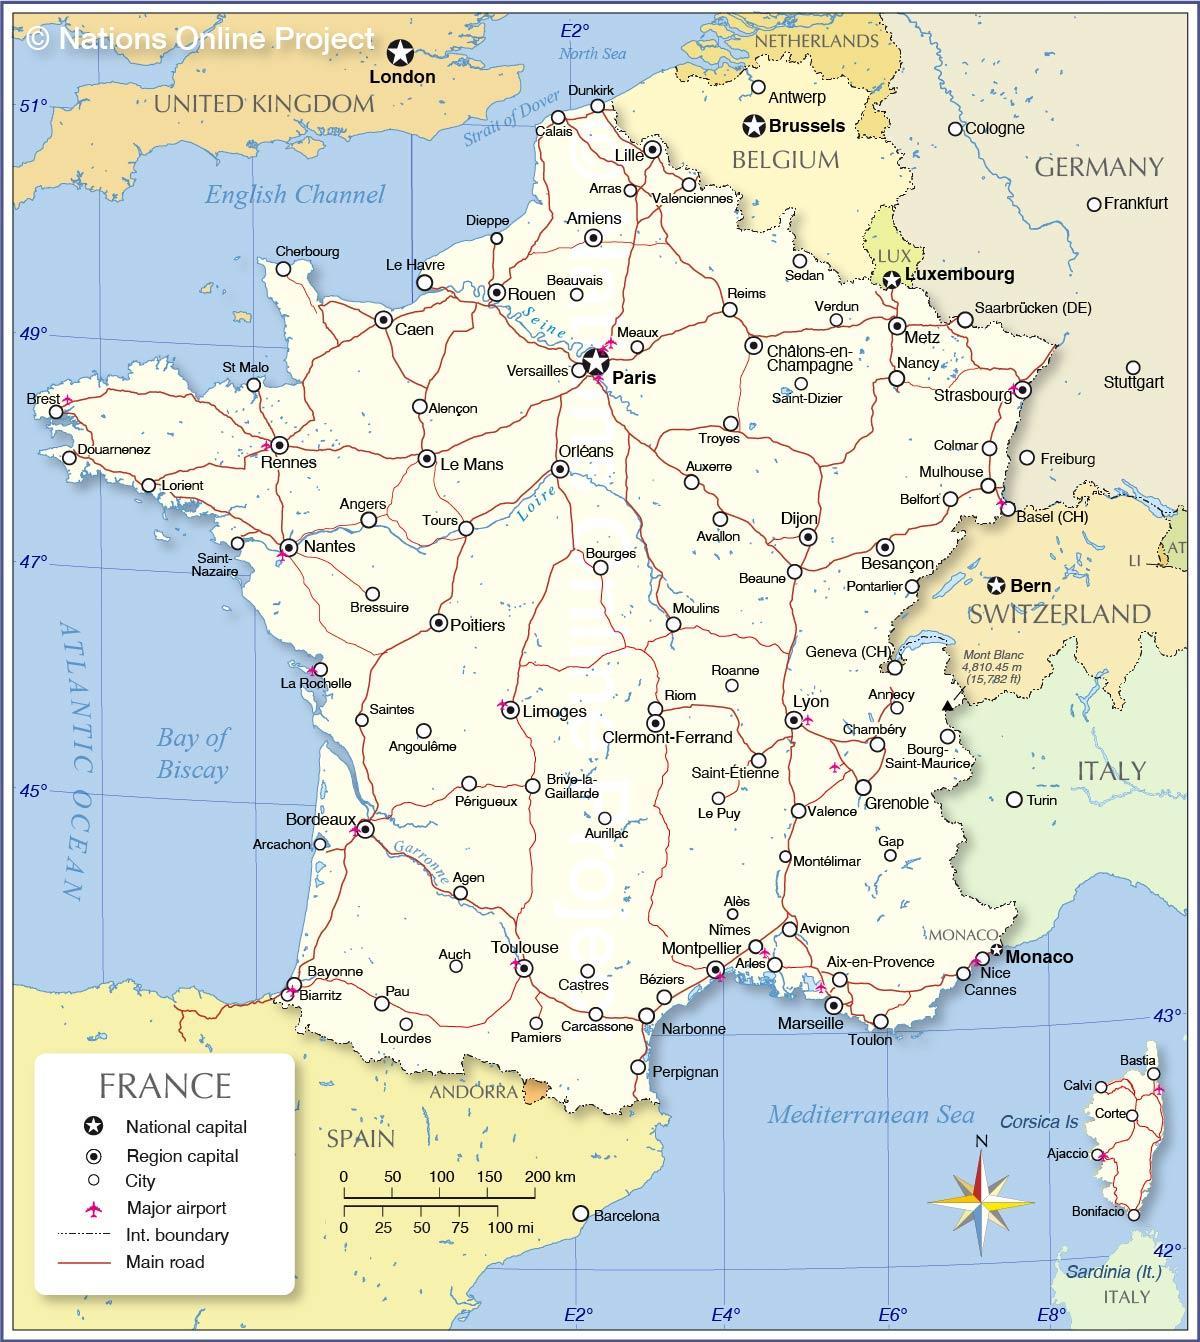 Dordogne france map Mauzens Miremont France